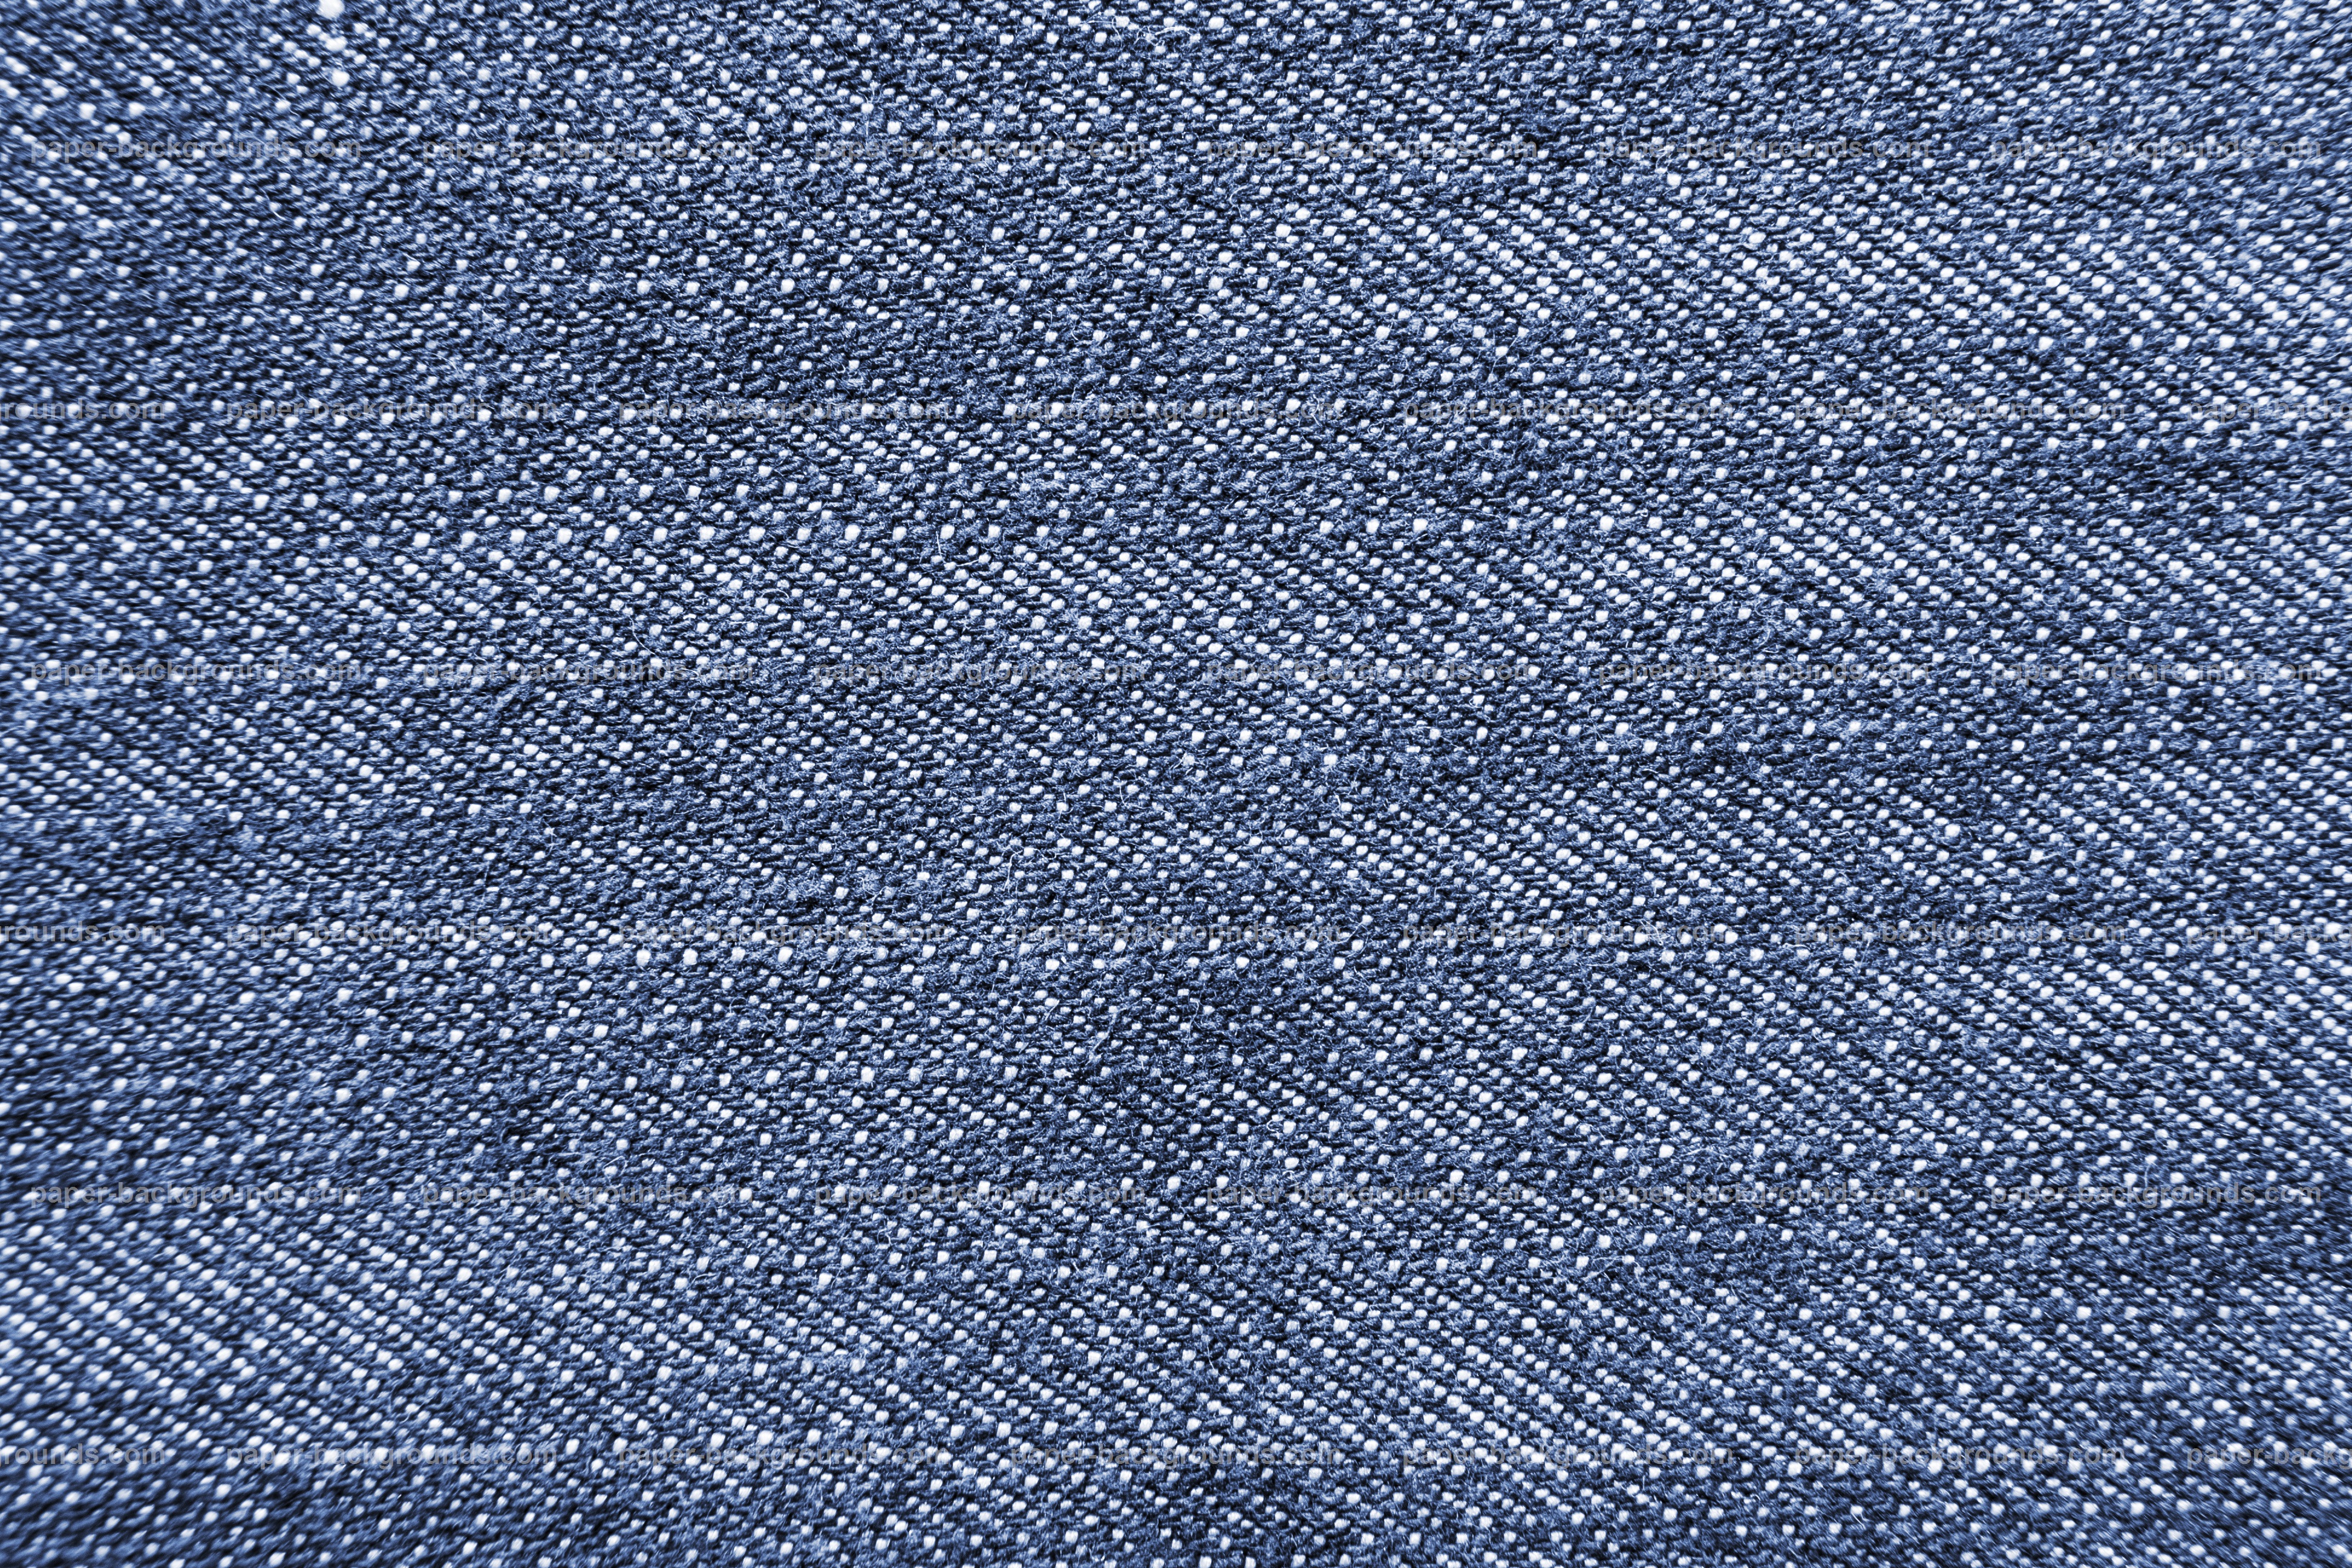 Paper Backgrounds | Blue Jeans Close Up Texture